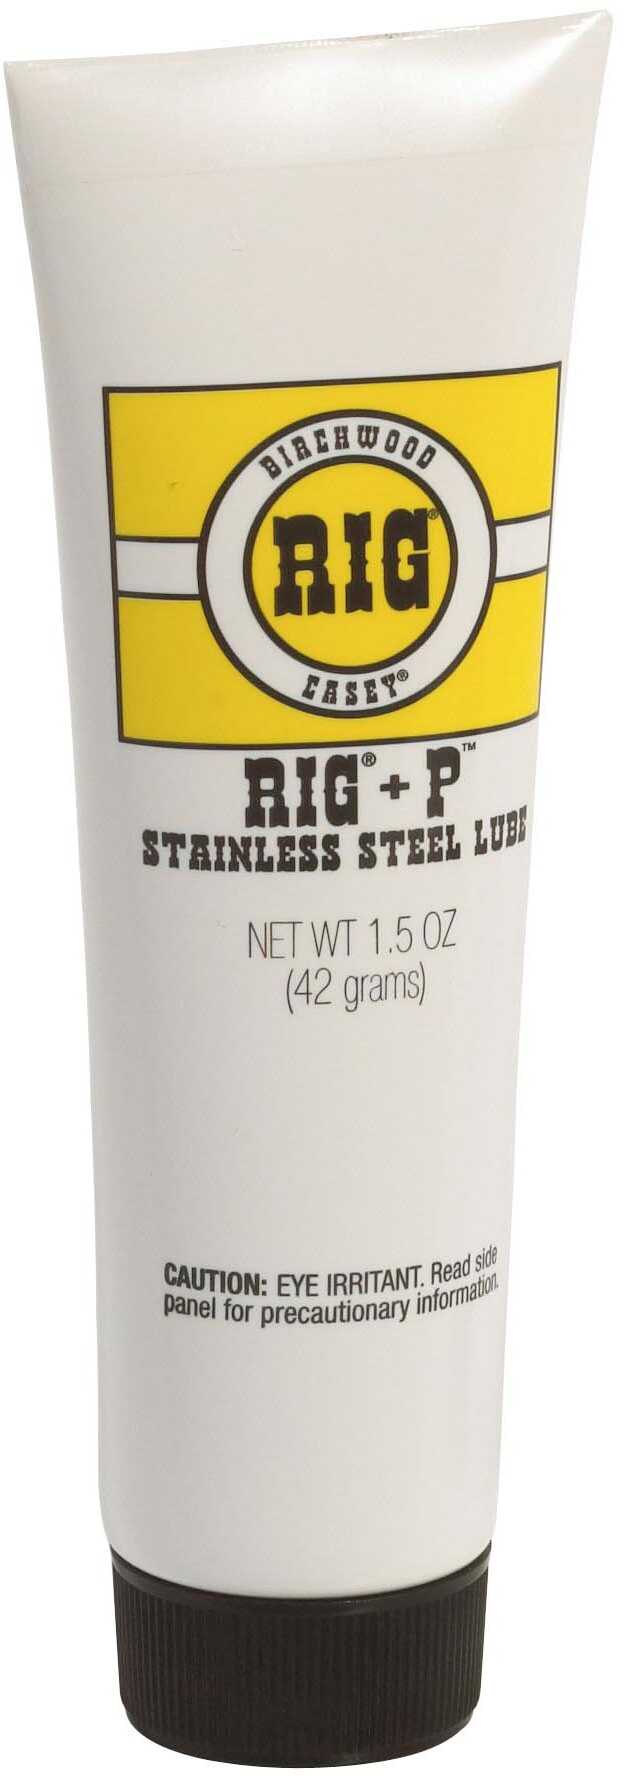 Birchwood Casey Rig +P Stainless Steel Lube 1.5 Ounce Tube 40051